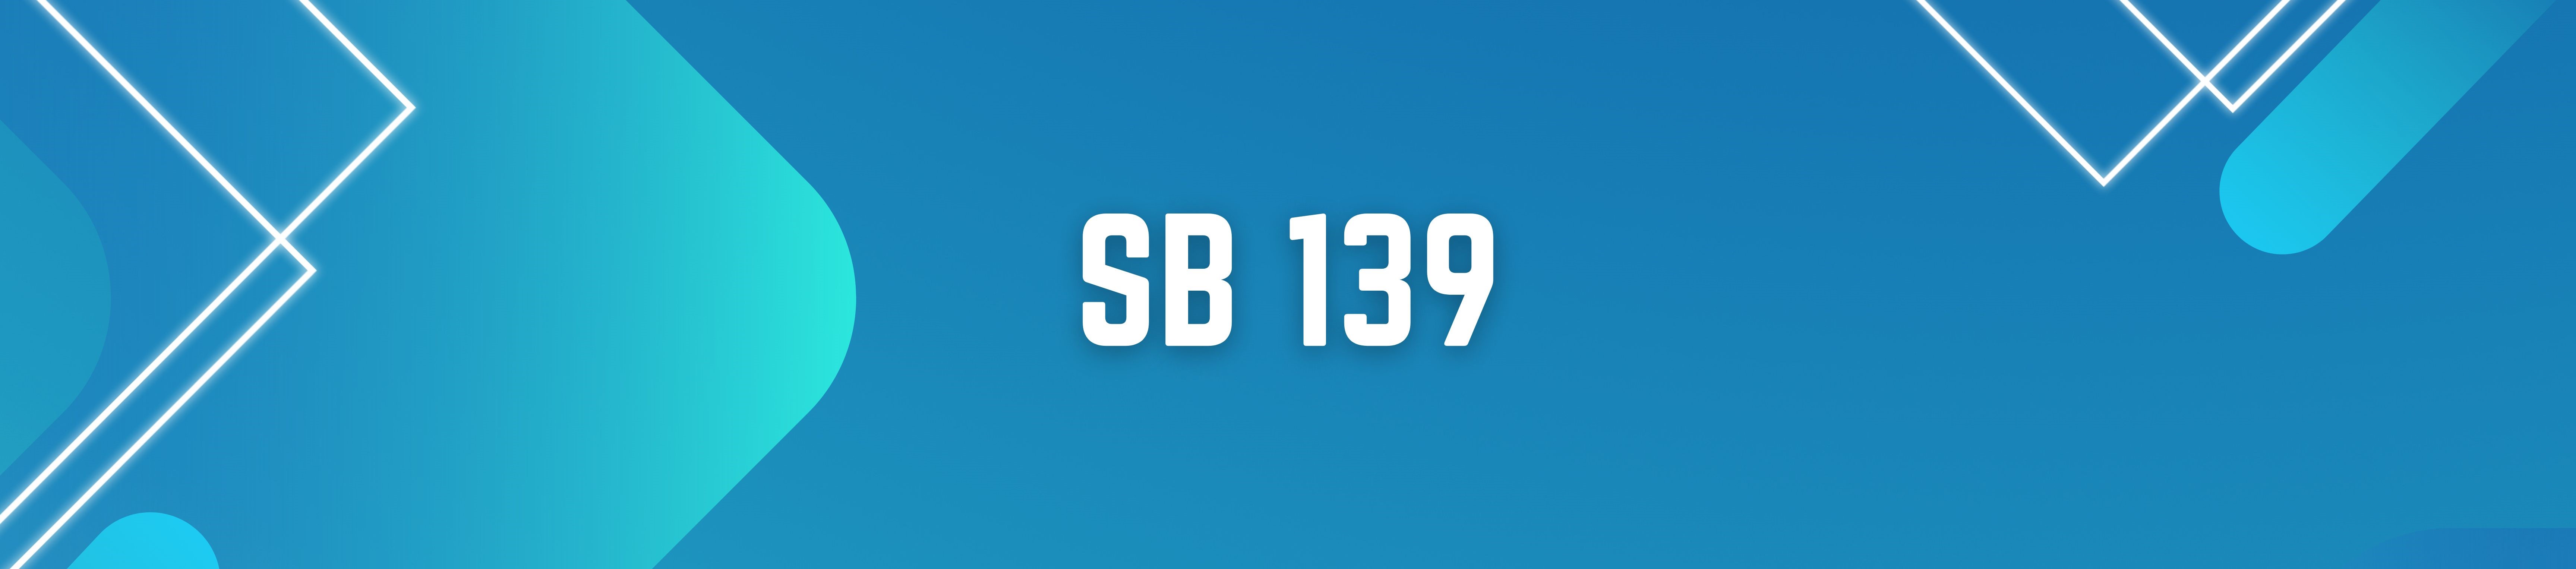 Senate Bill 139